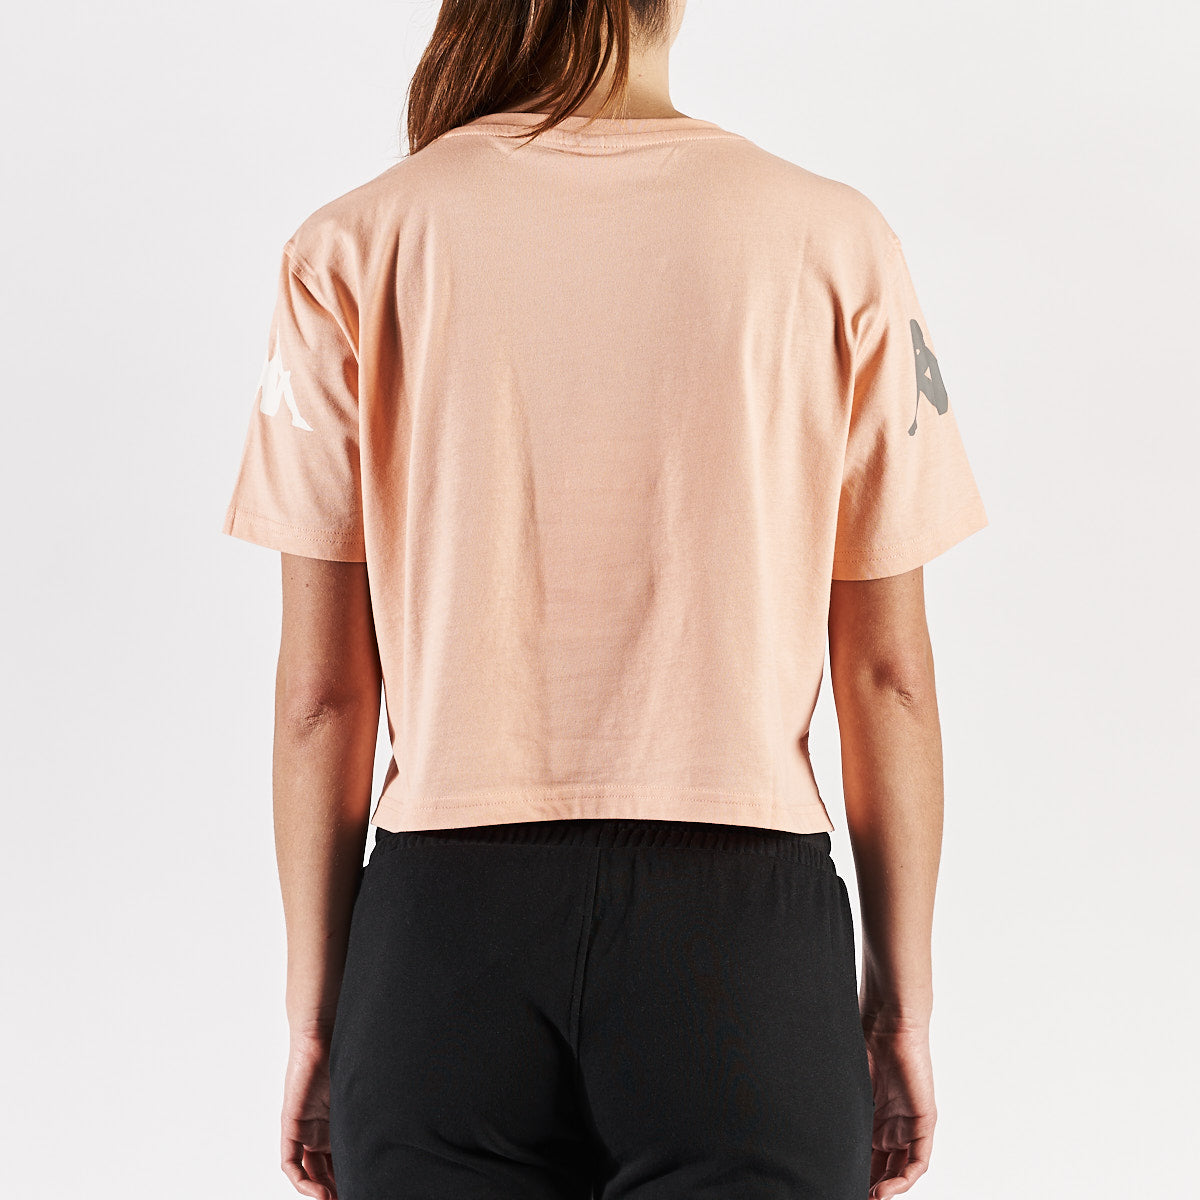 T-shirt Amilk Authentic orange femme - Image 3